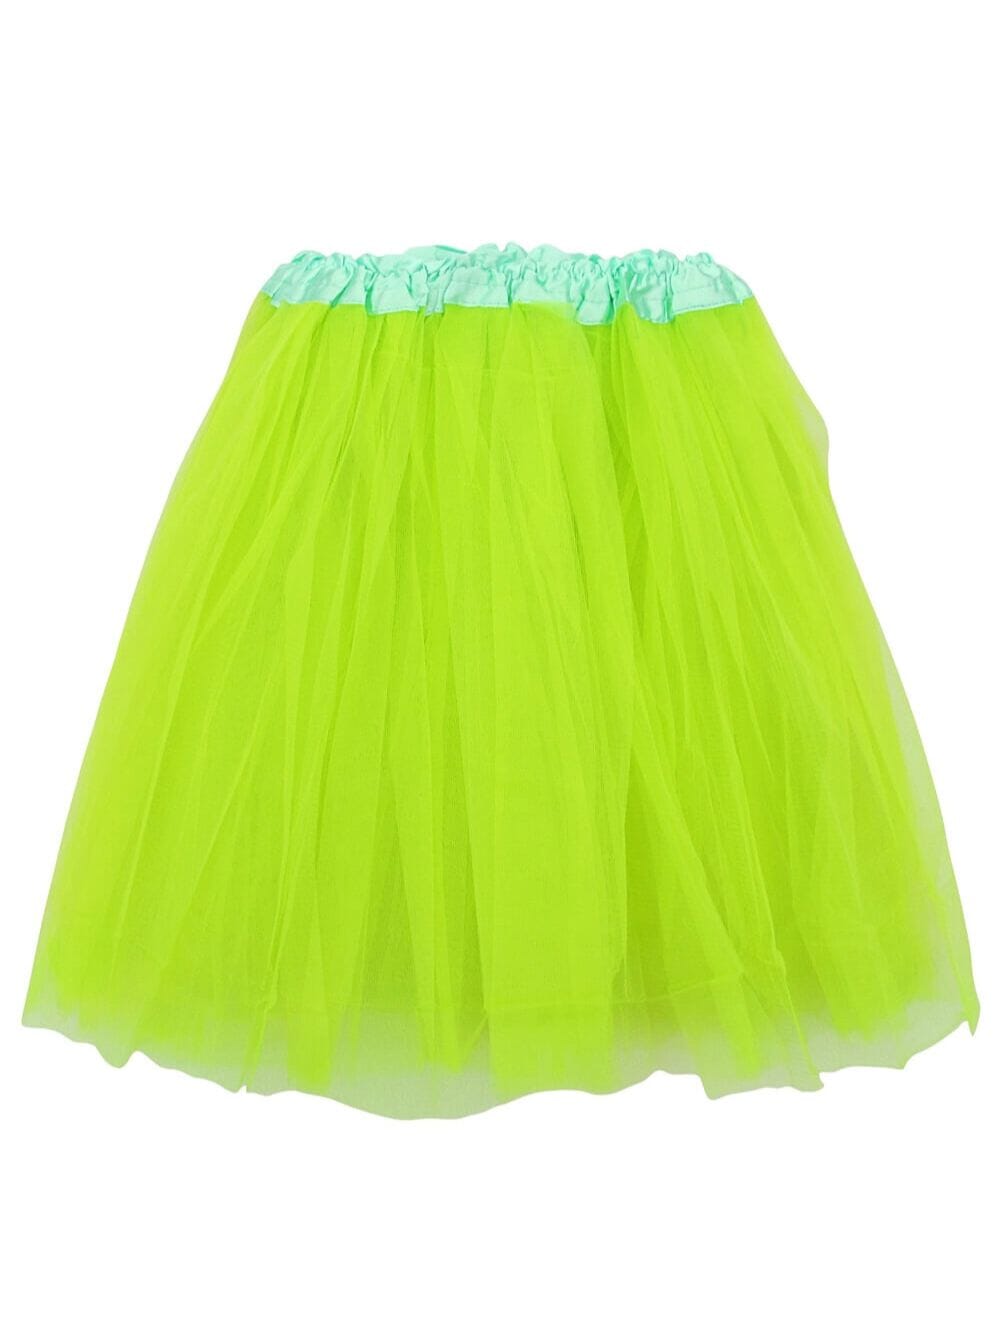 Neon Green Plus Size Adult Tutu Skirt - Women's Plus Size 3- Layer Basic Ballet Costume Dance Tutus - Sydney So Sweet